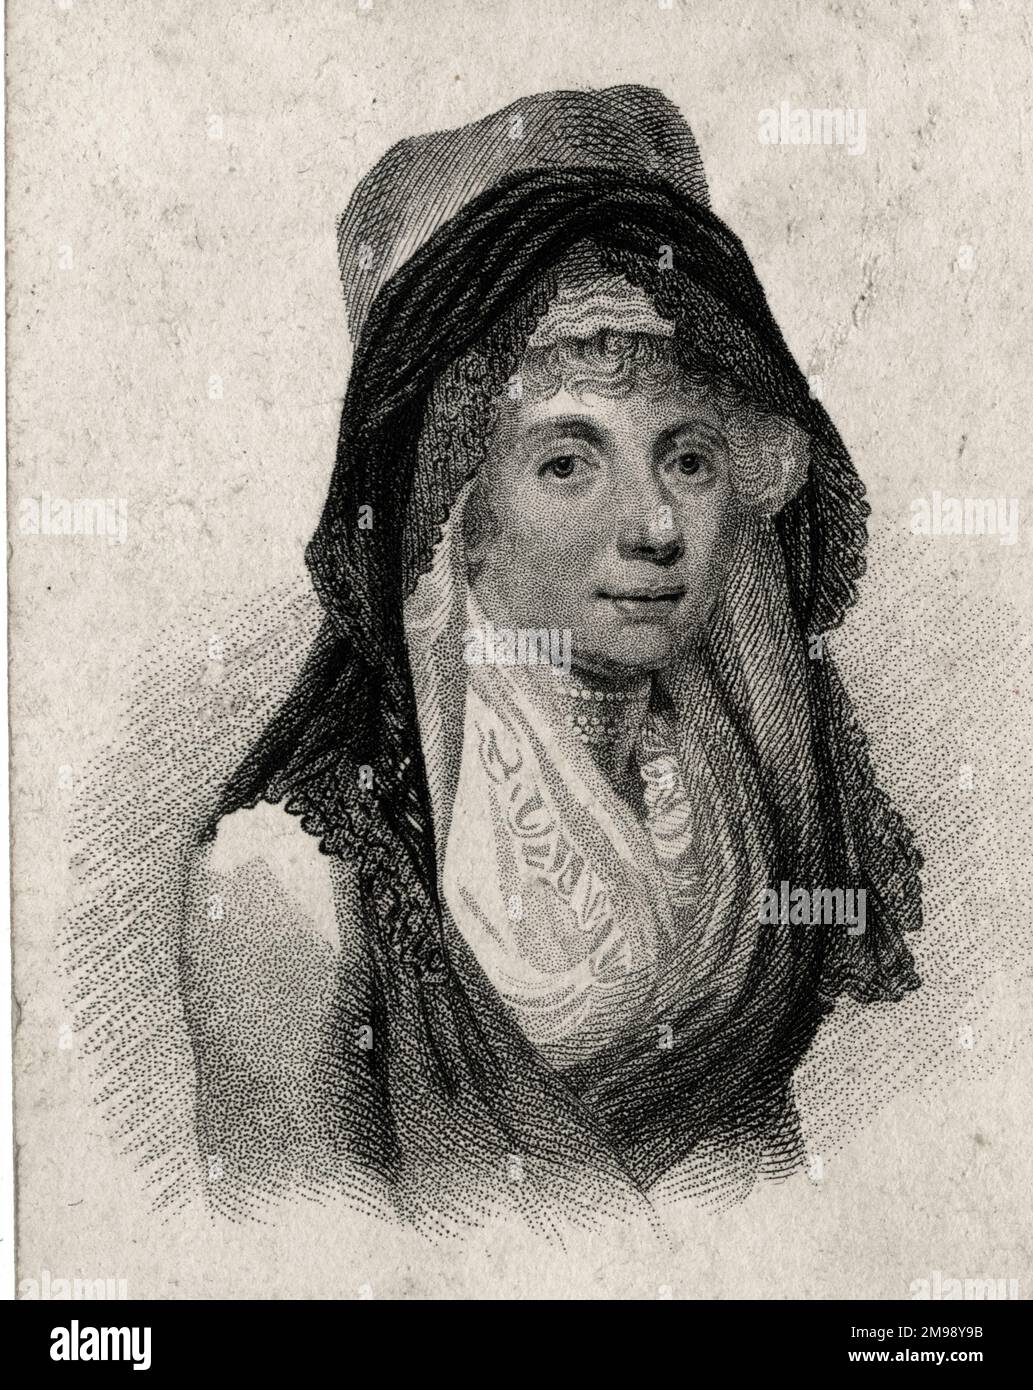 Queen Charlotte (Charlotte of Mecklenburg-Strelitz, 1744-1818), Consort of King George III. Stock Photo